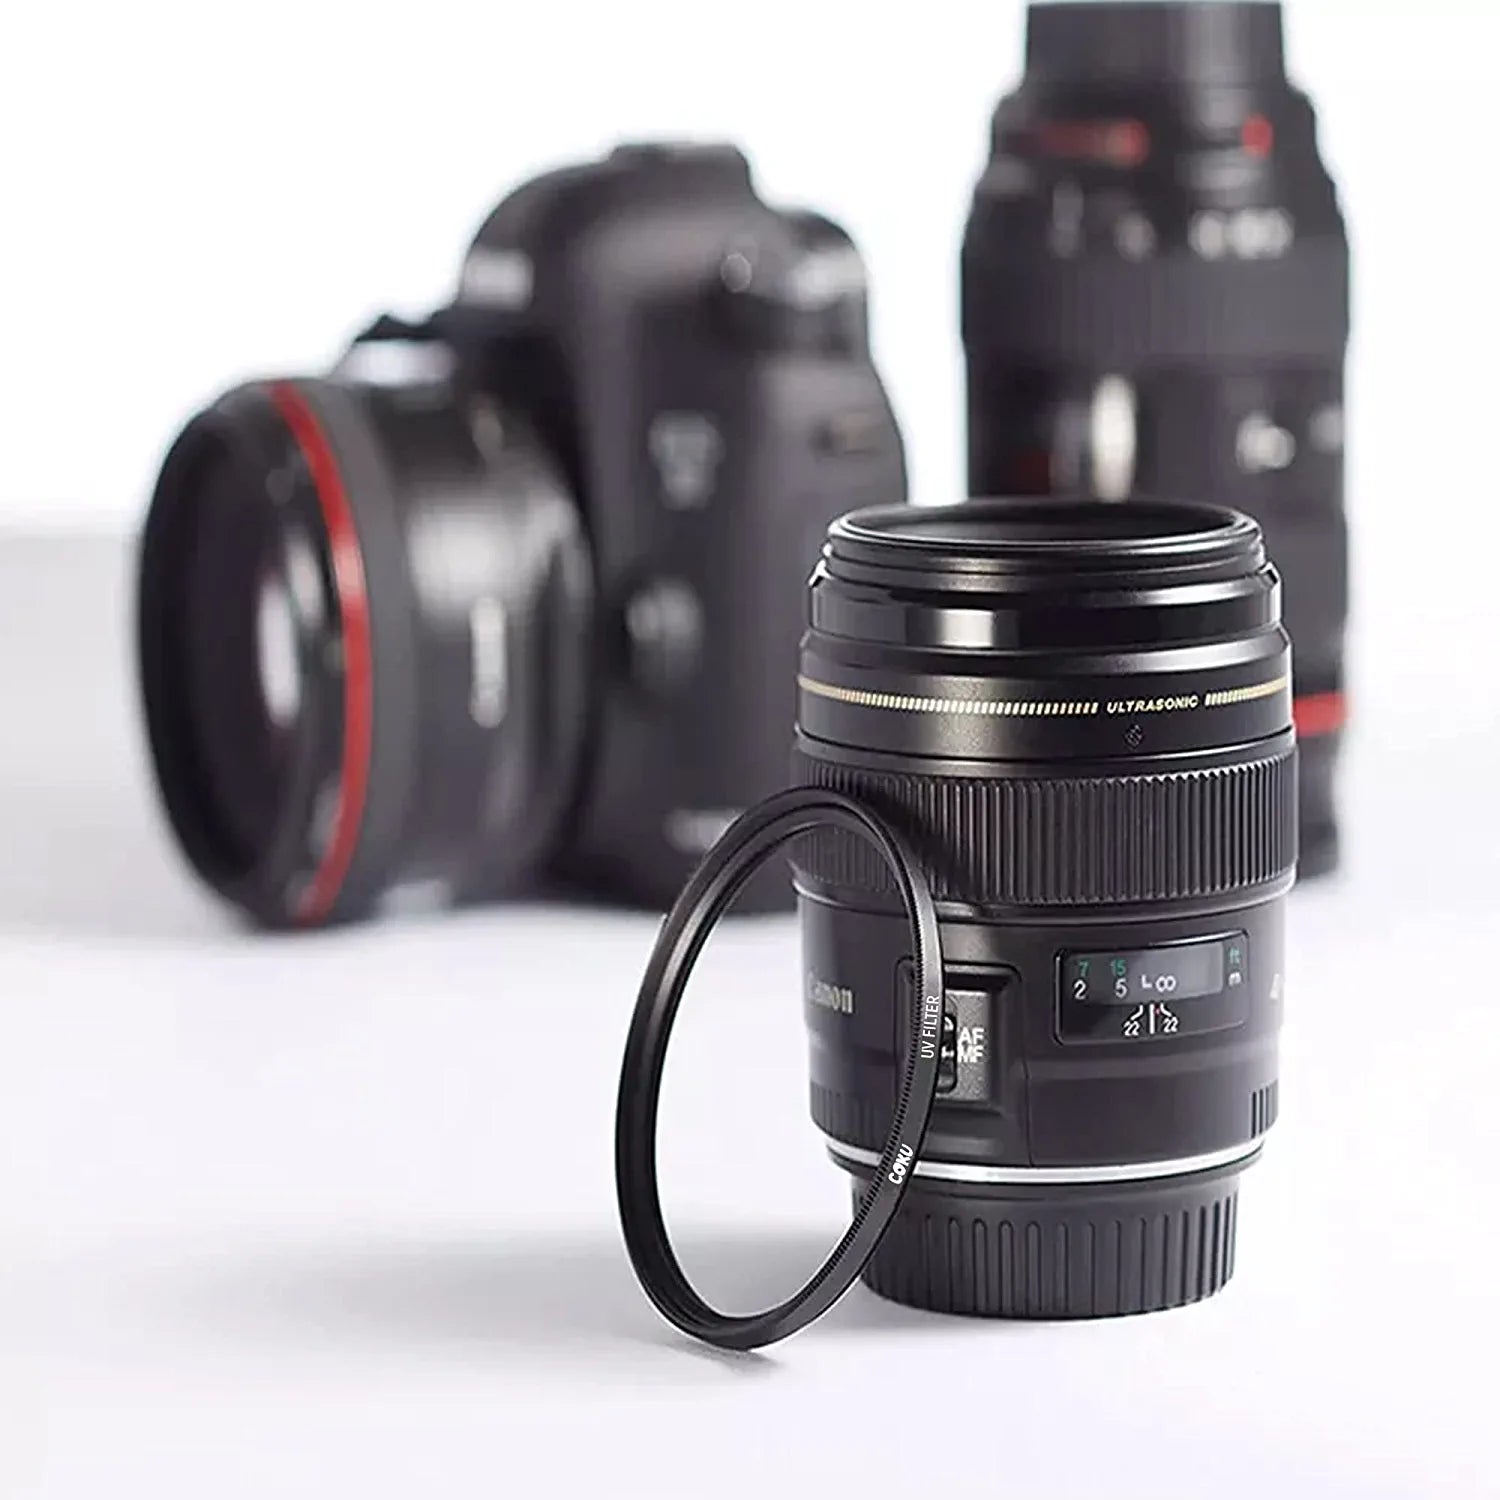 UV Portction Lens for Camera 52mm Ultra Slim Filter Ring for Camera Lens (52mm)